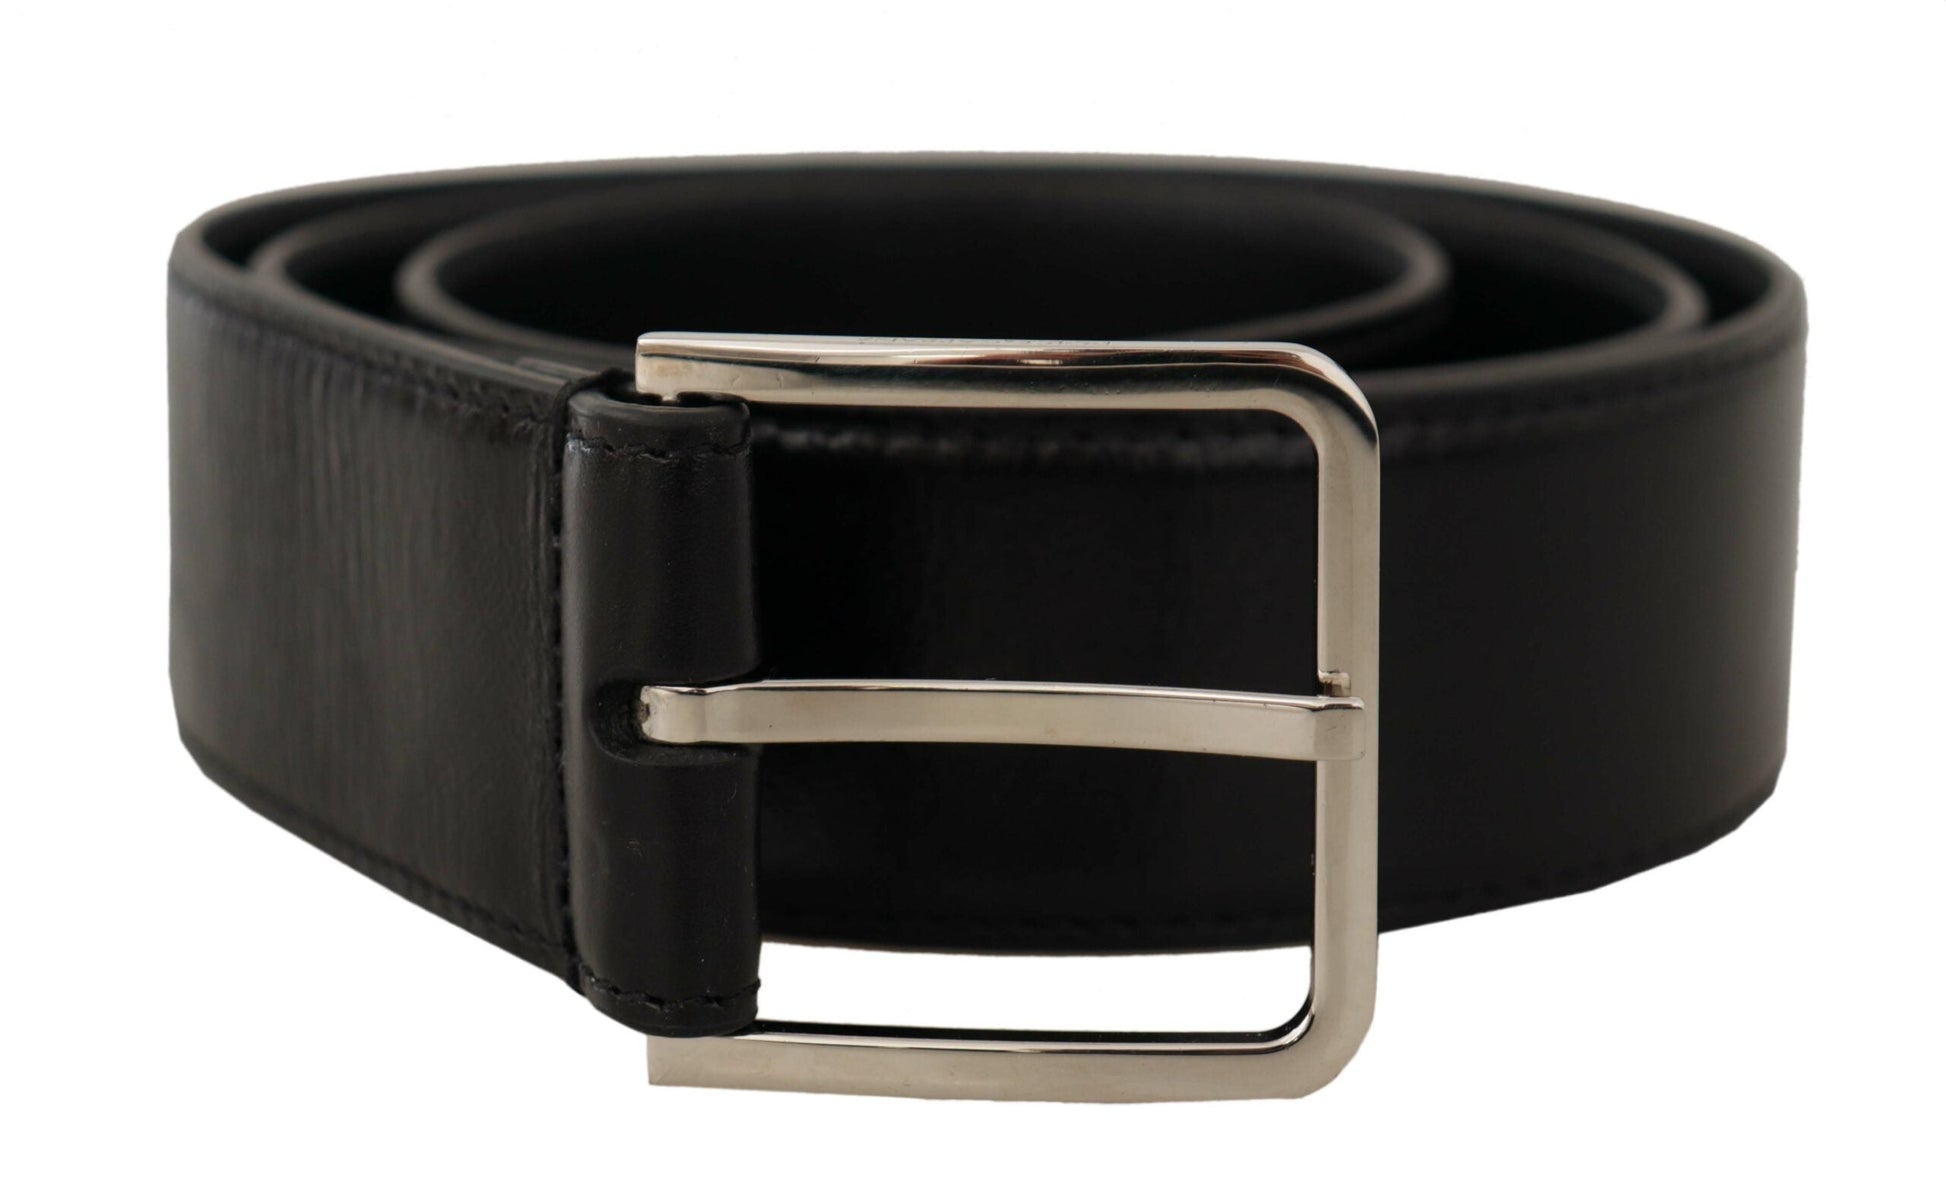 Dolce & Gabbana Elegant Leather Belt with Metal Buckle | Fashionsarah.com